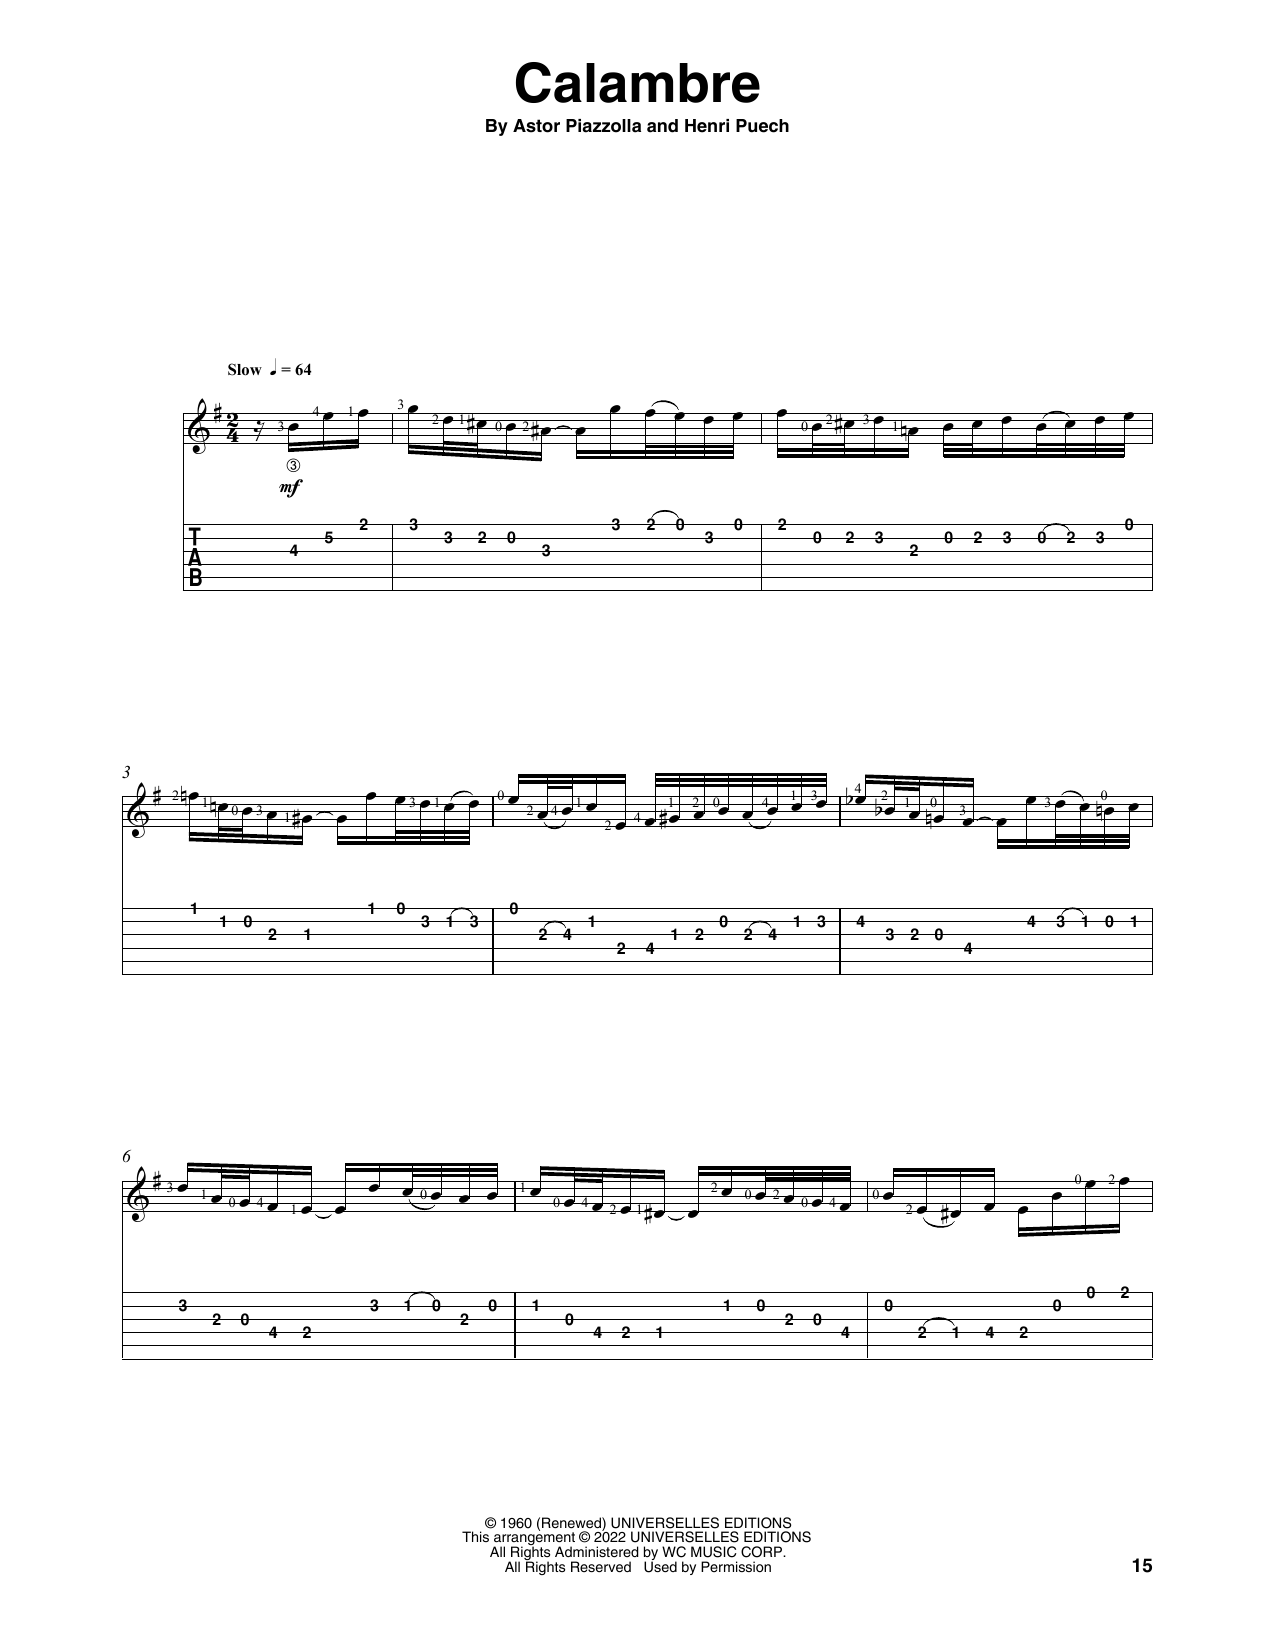 Astor Piazzolla Calambre (arr. Celil Refik Kaya) Sheet Music Notes & Chords for Solo Guitar - Download or Print PDF